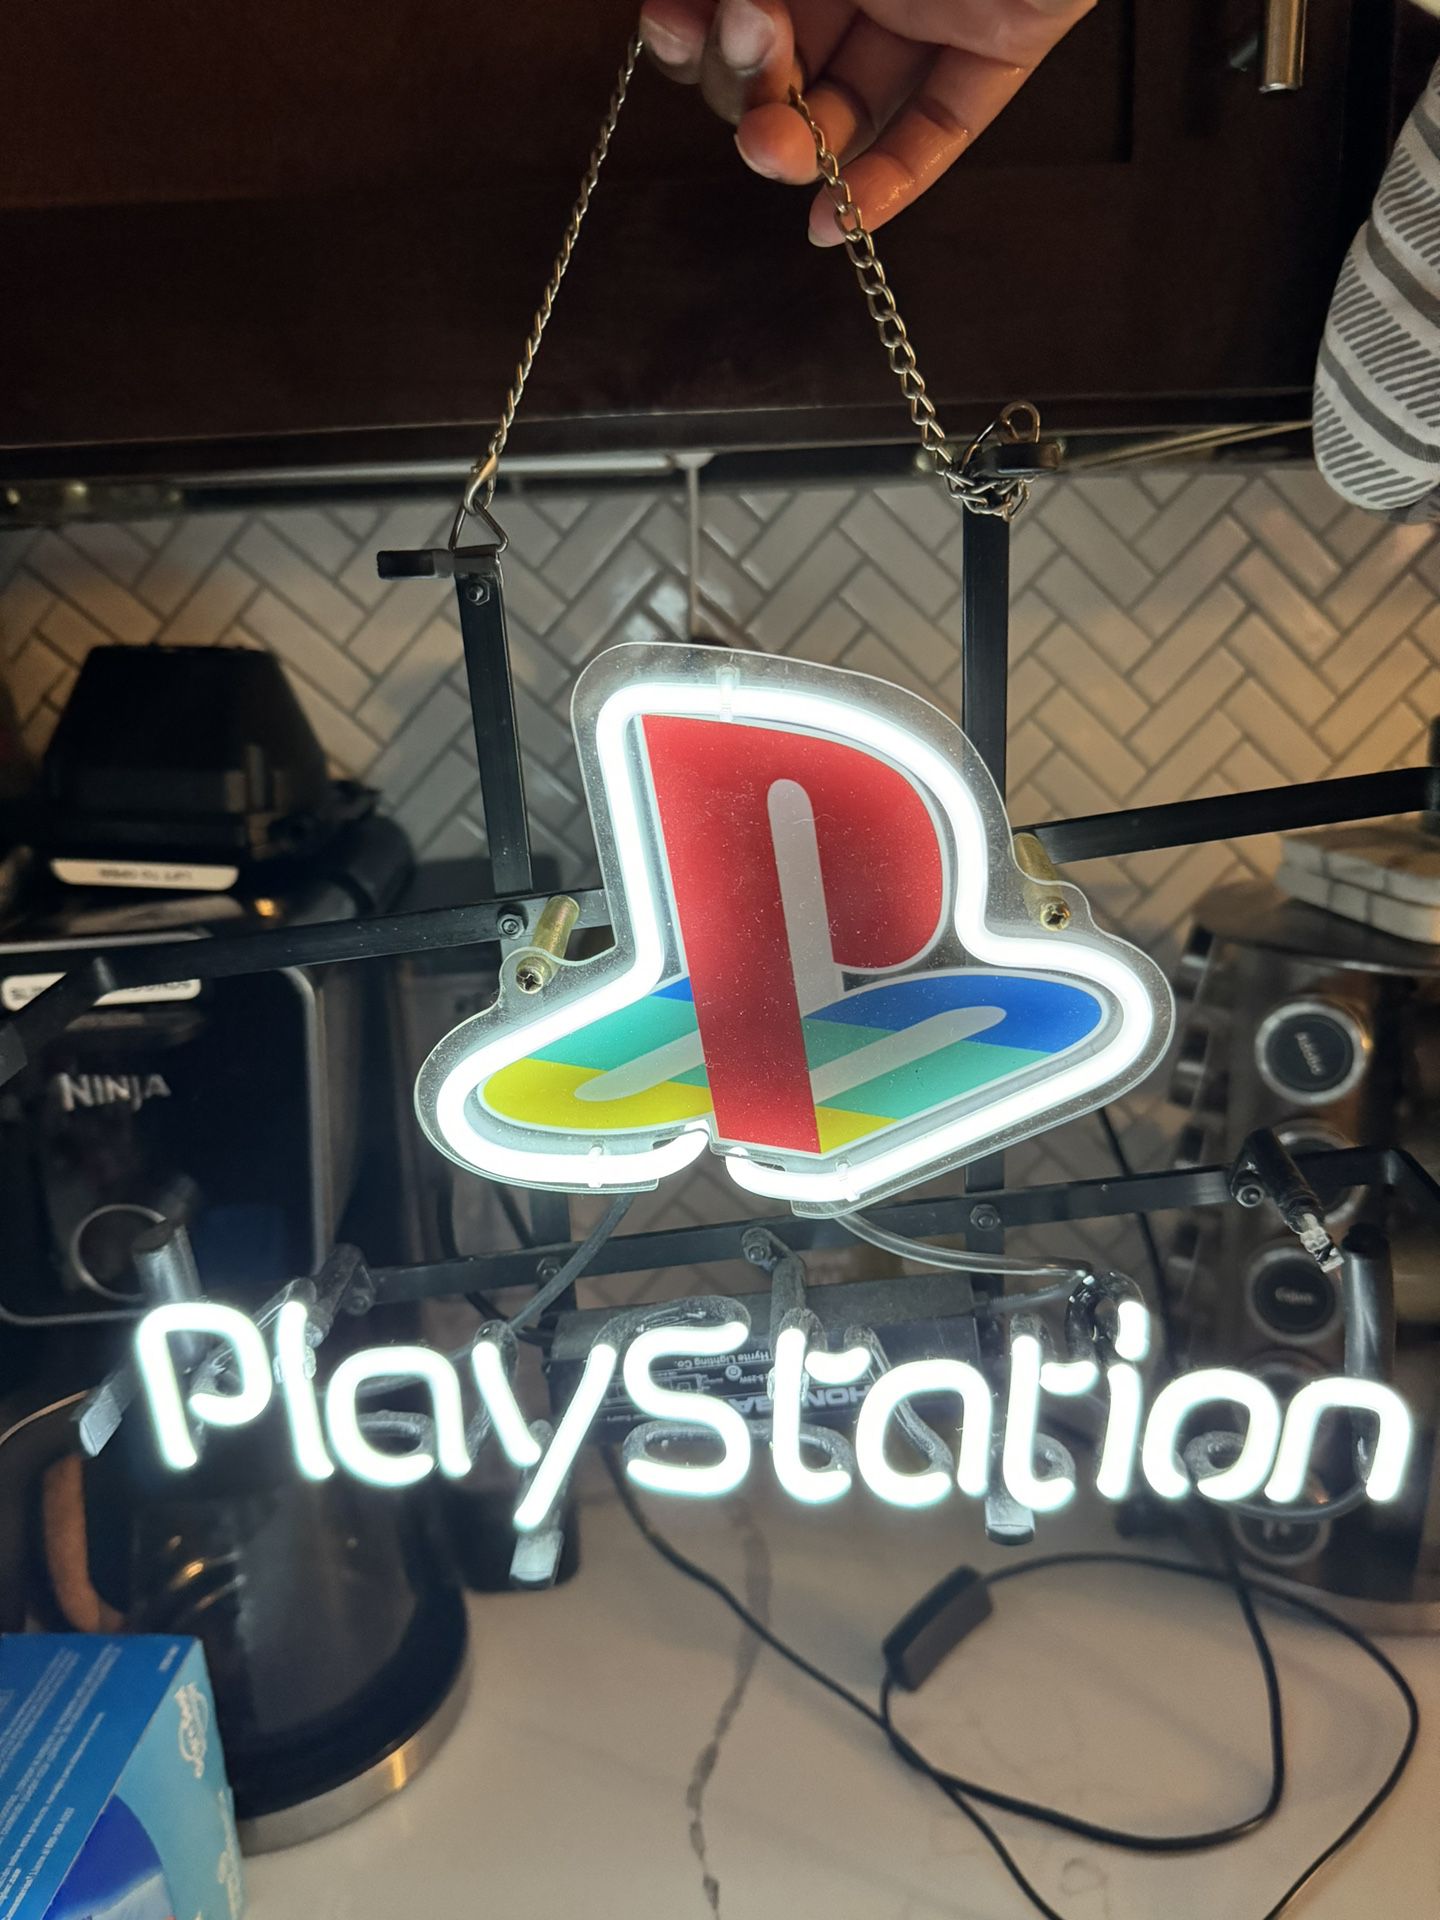 PlayStation LED Sign